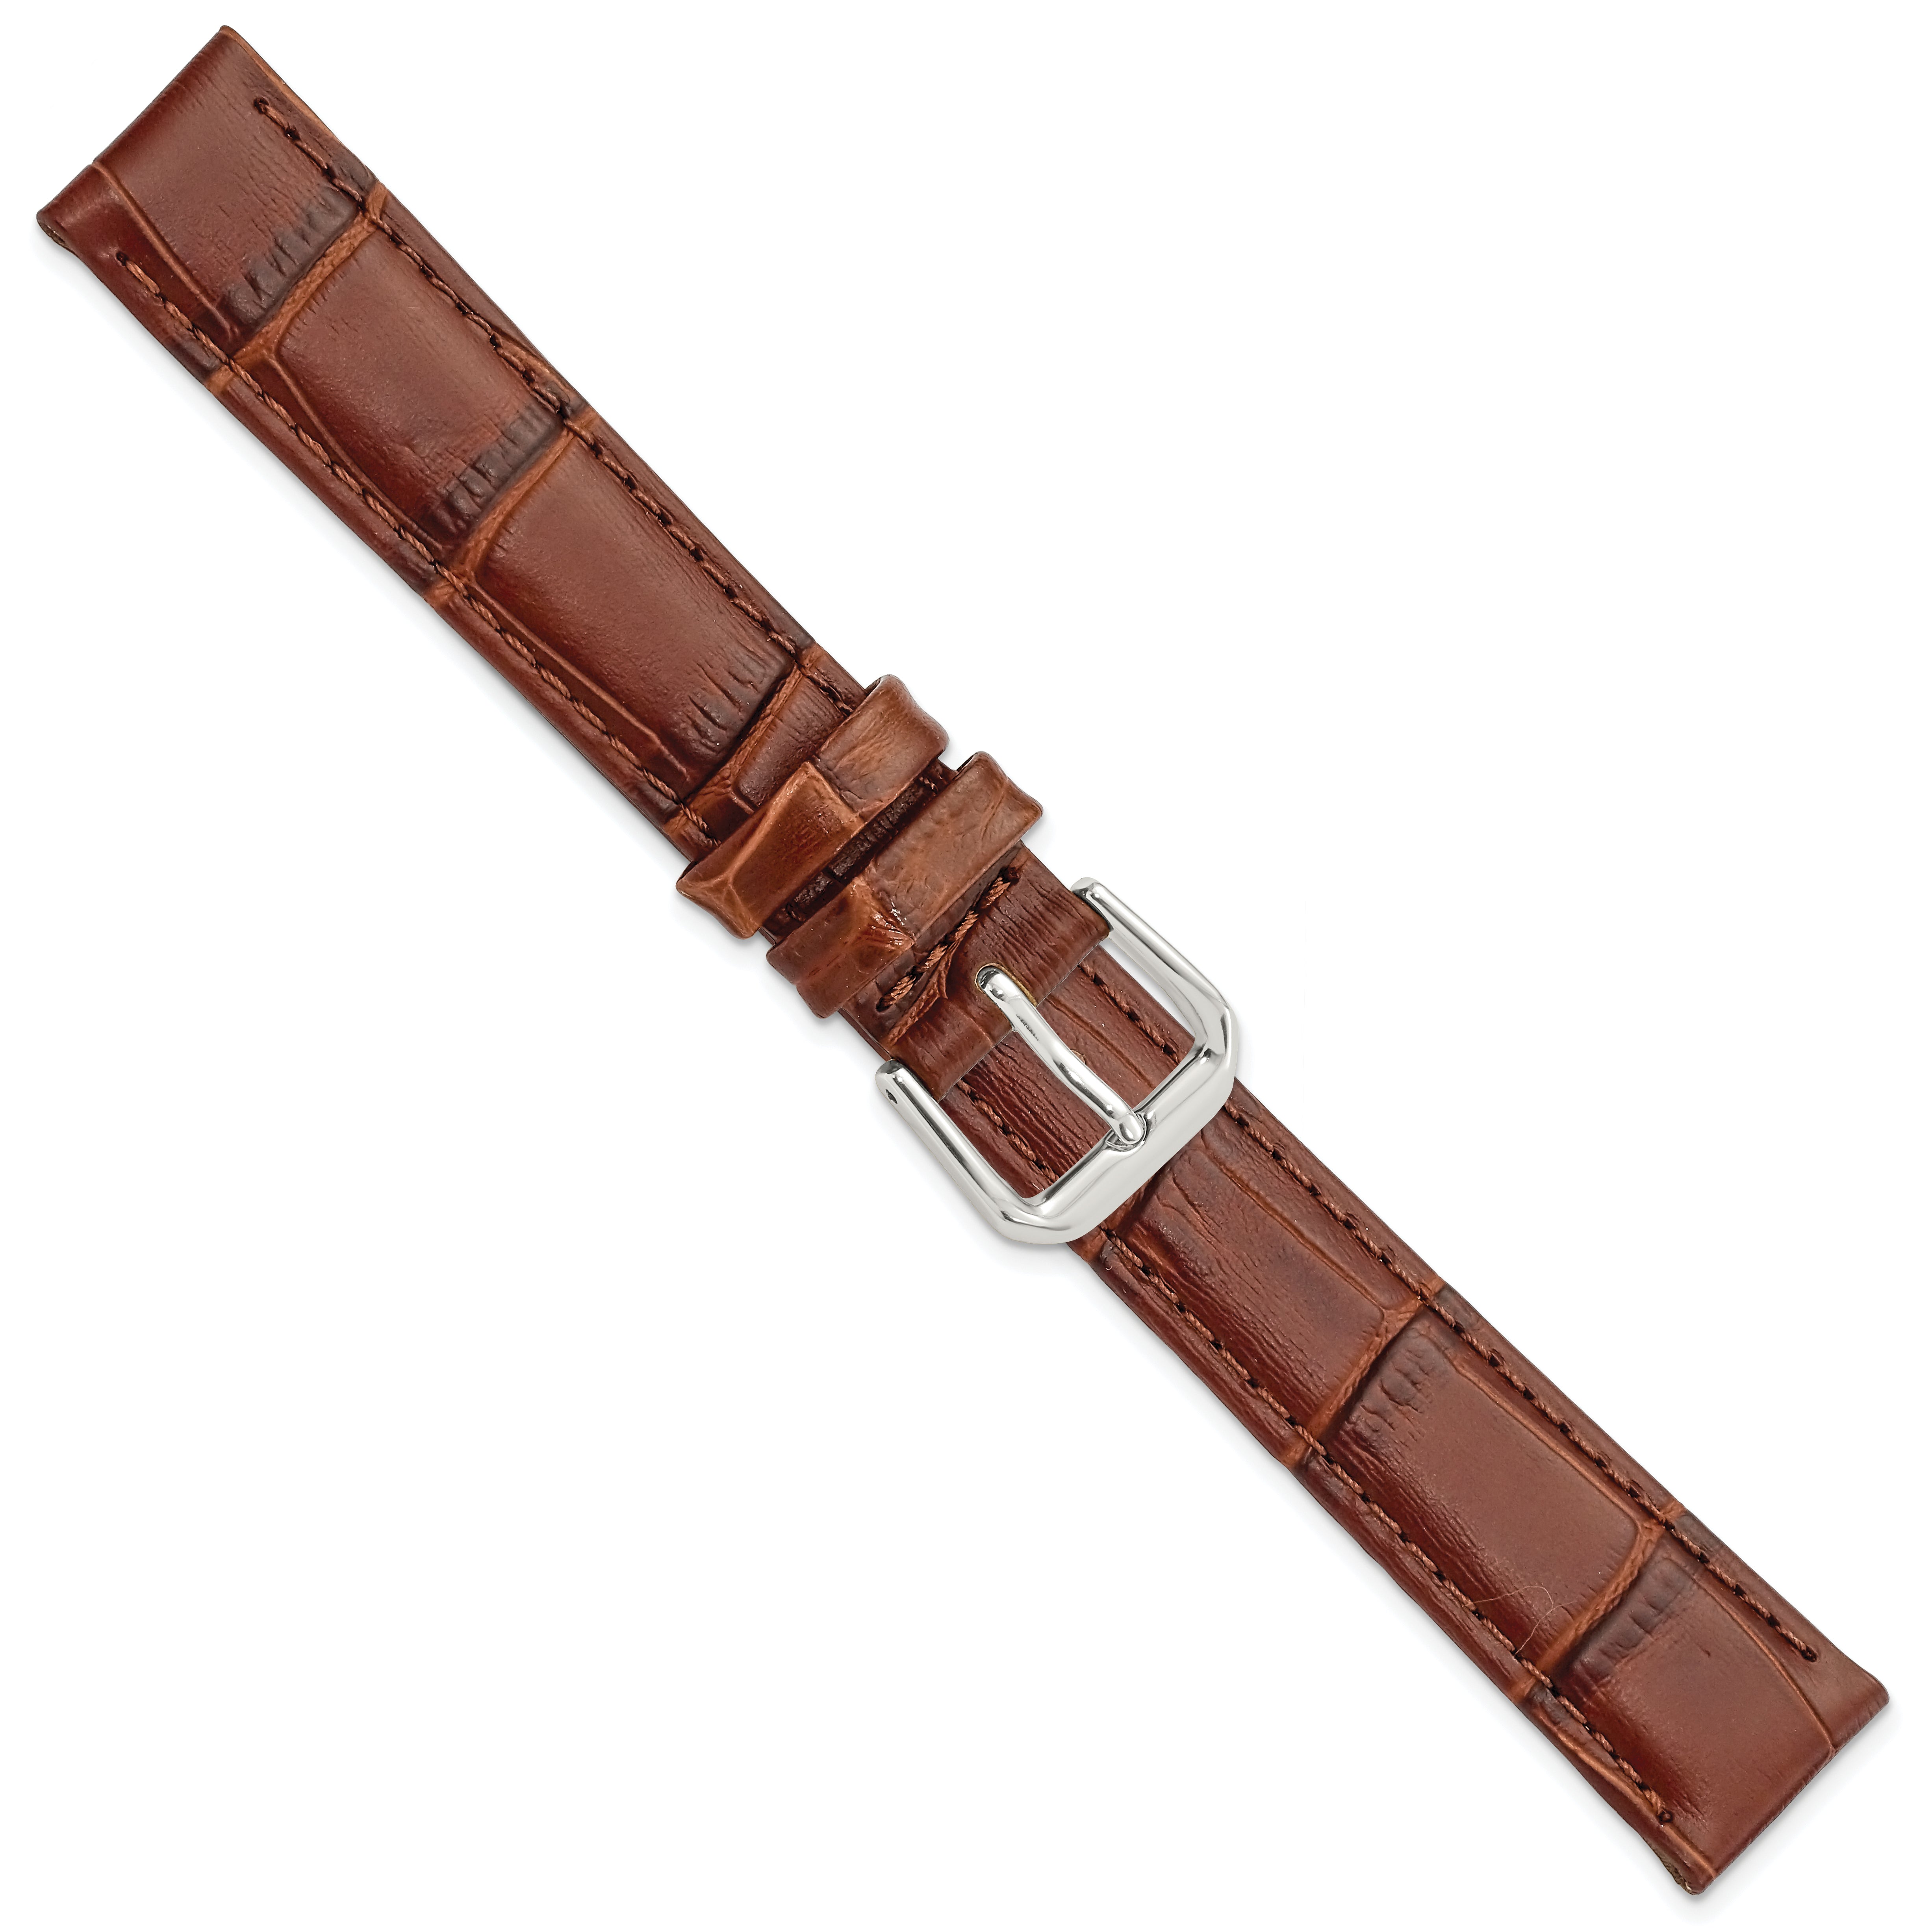 12mm Havana Brown Matte Wild Alligator Grain Leather with Silver-tone Buckle 6.75 inch Watch Band